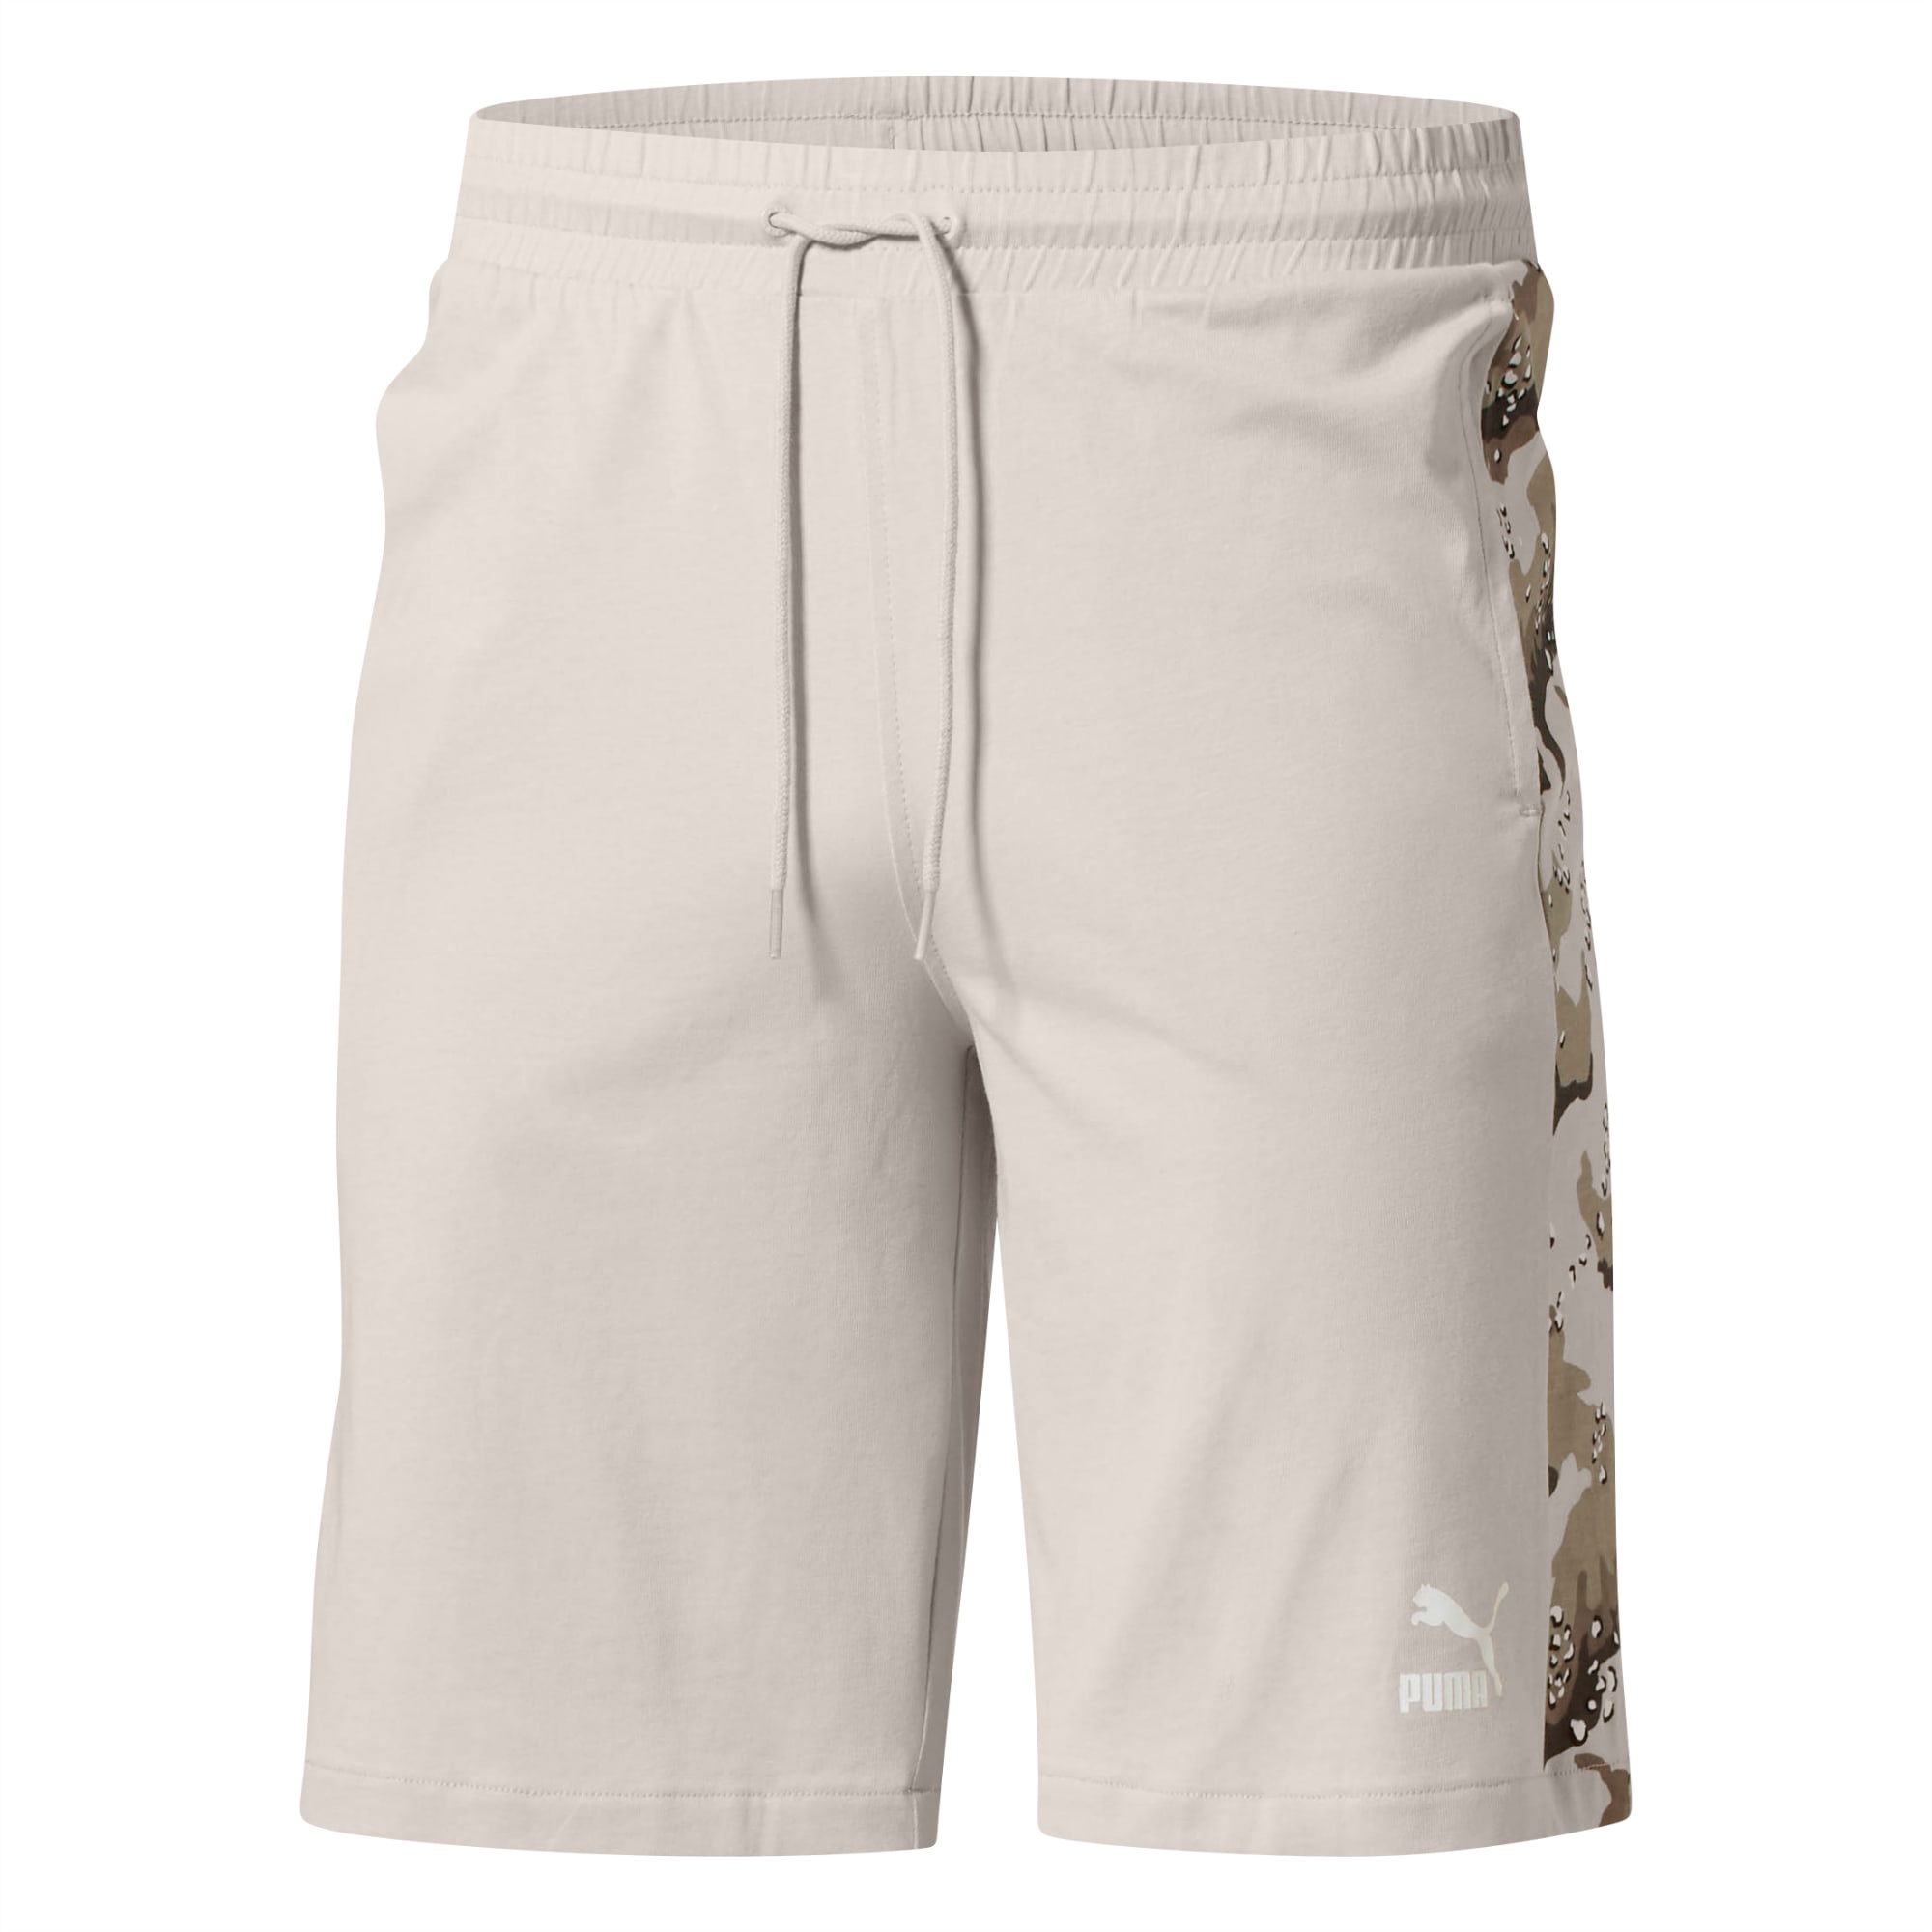 puma wild pack shorts